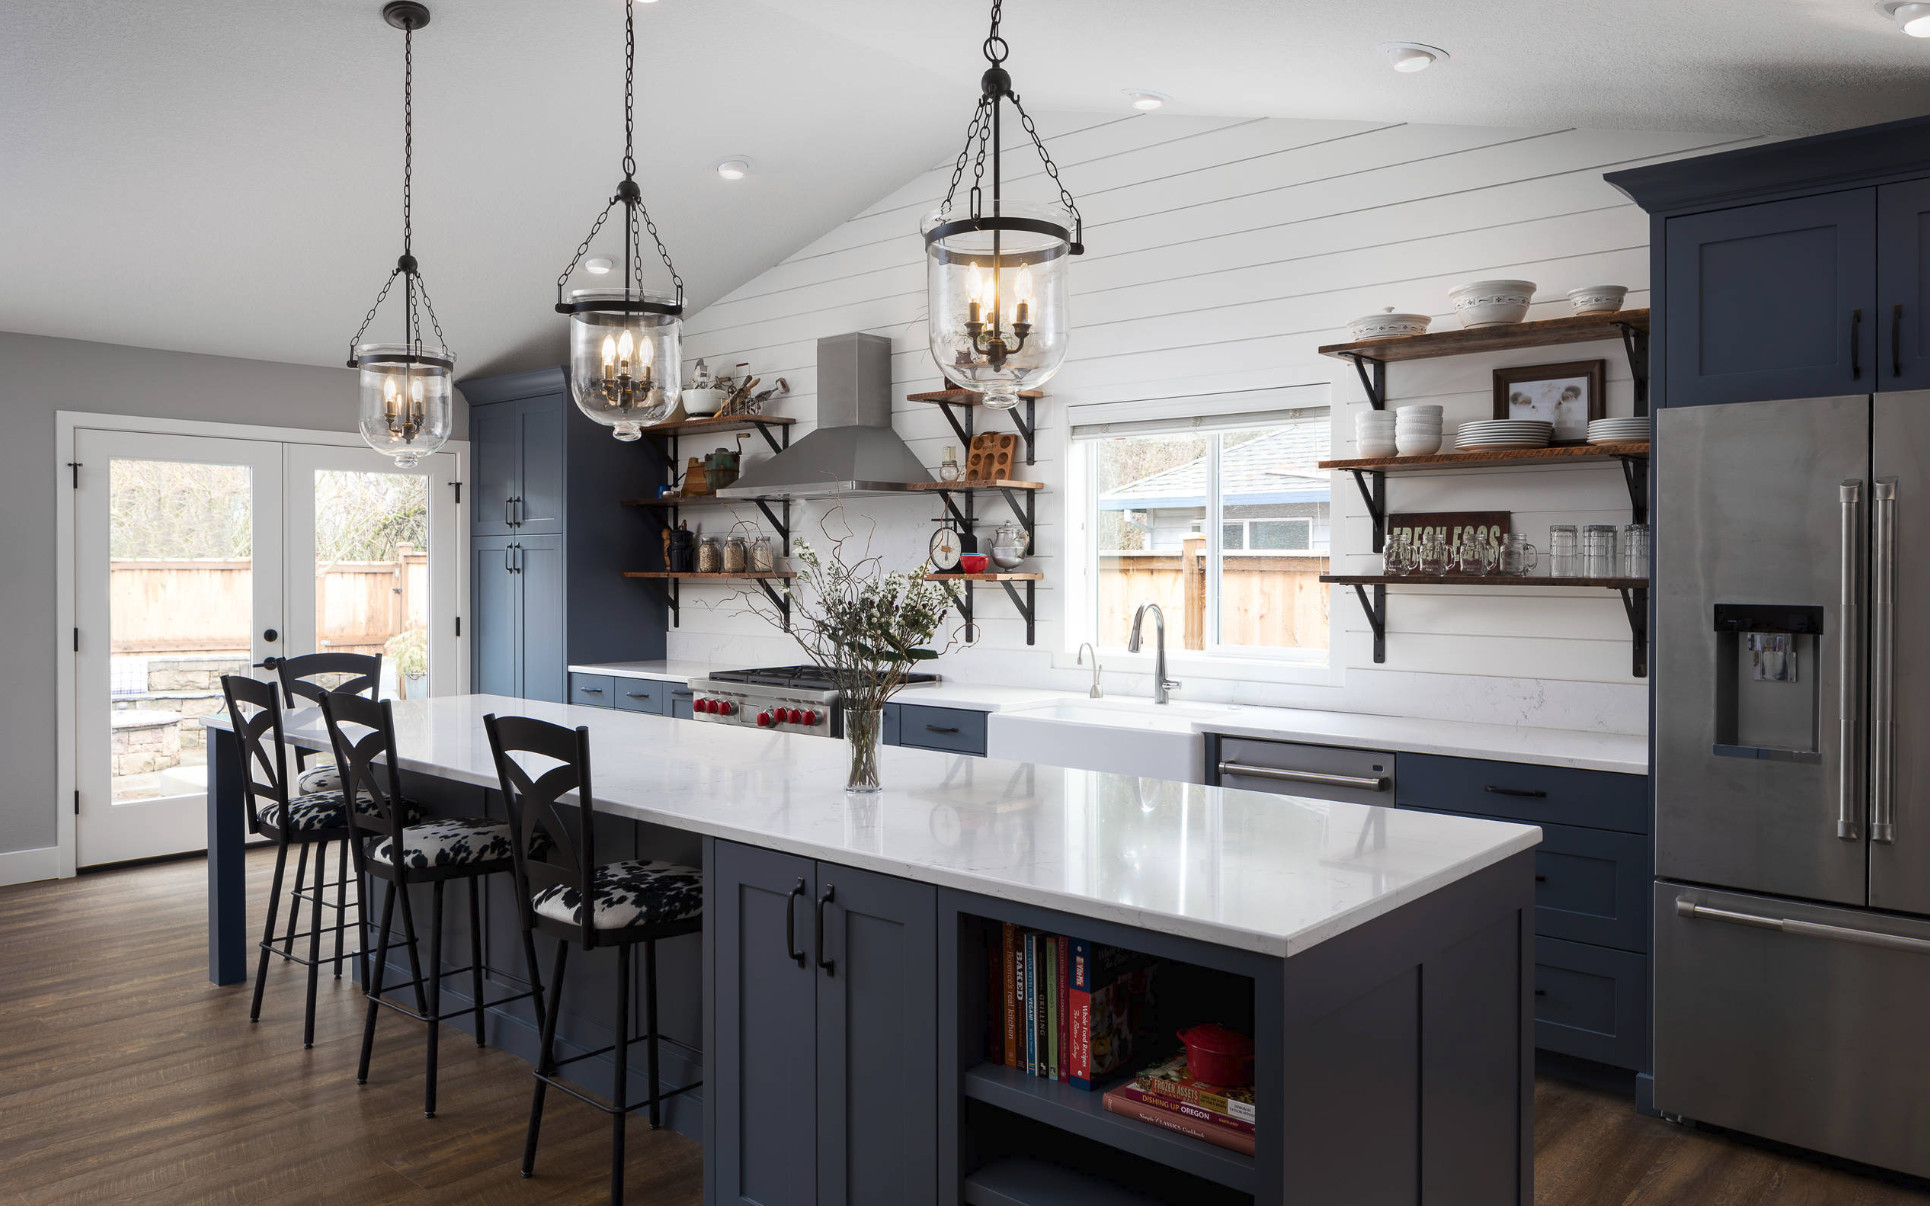 Farmhouse Kitchen Design Ideas
 Here Are 15 Modern Farmhouse Kitchen Ideas to Inspire You